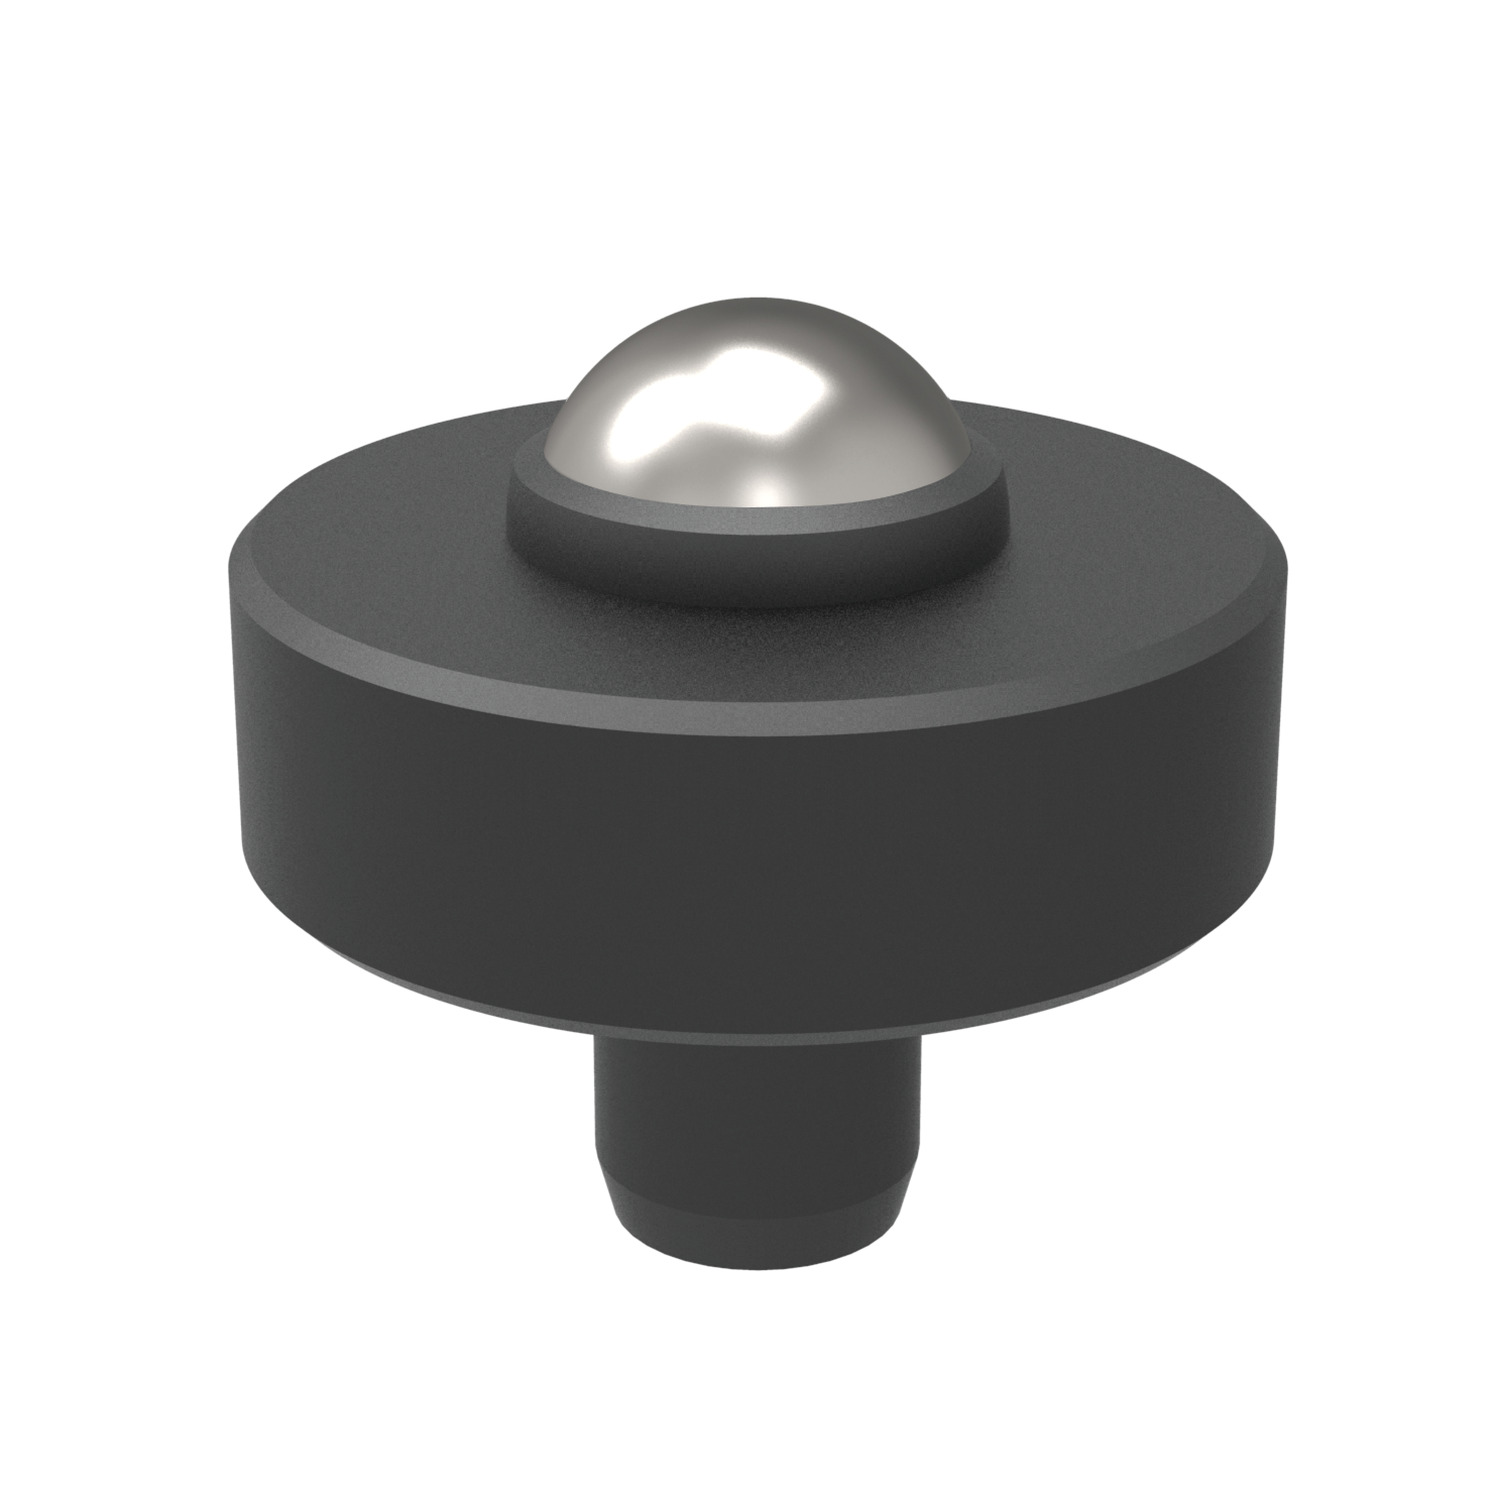 Product 15090, Locating Pad - Pivot Ball for screw jacks / 